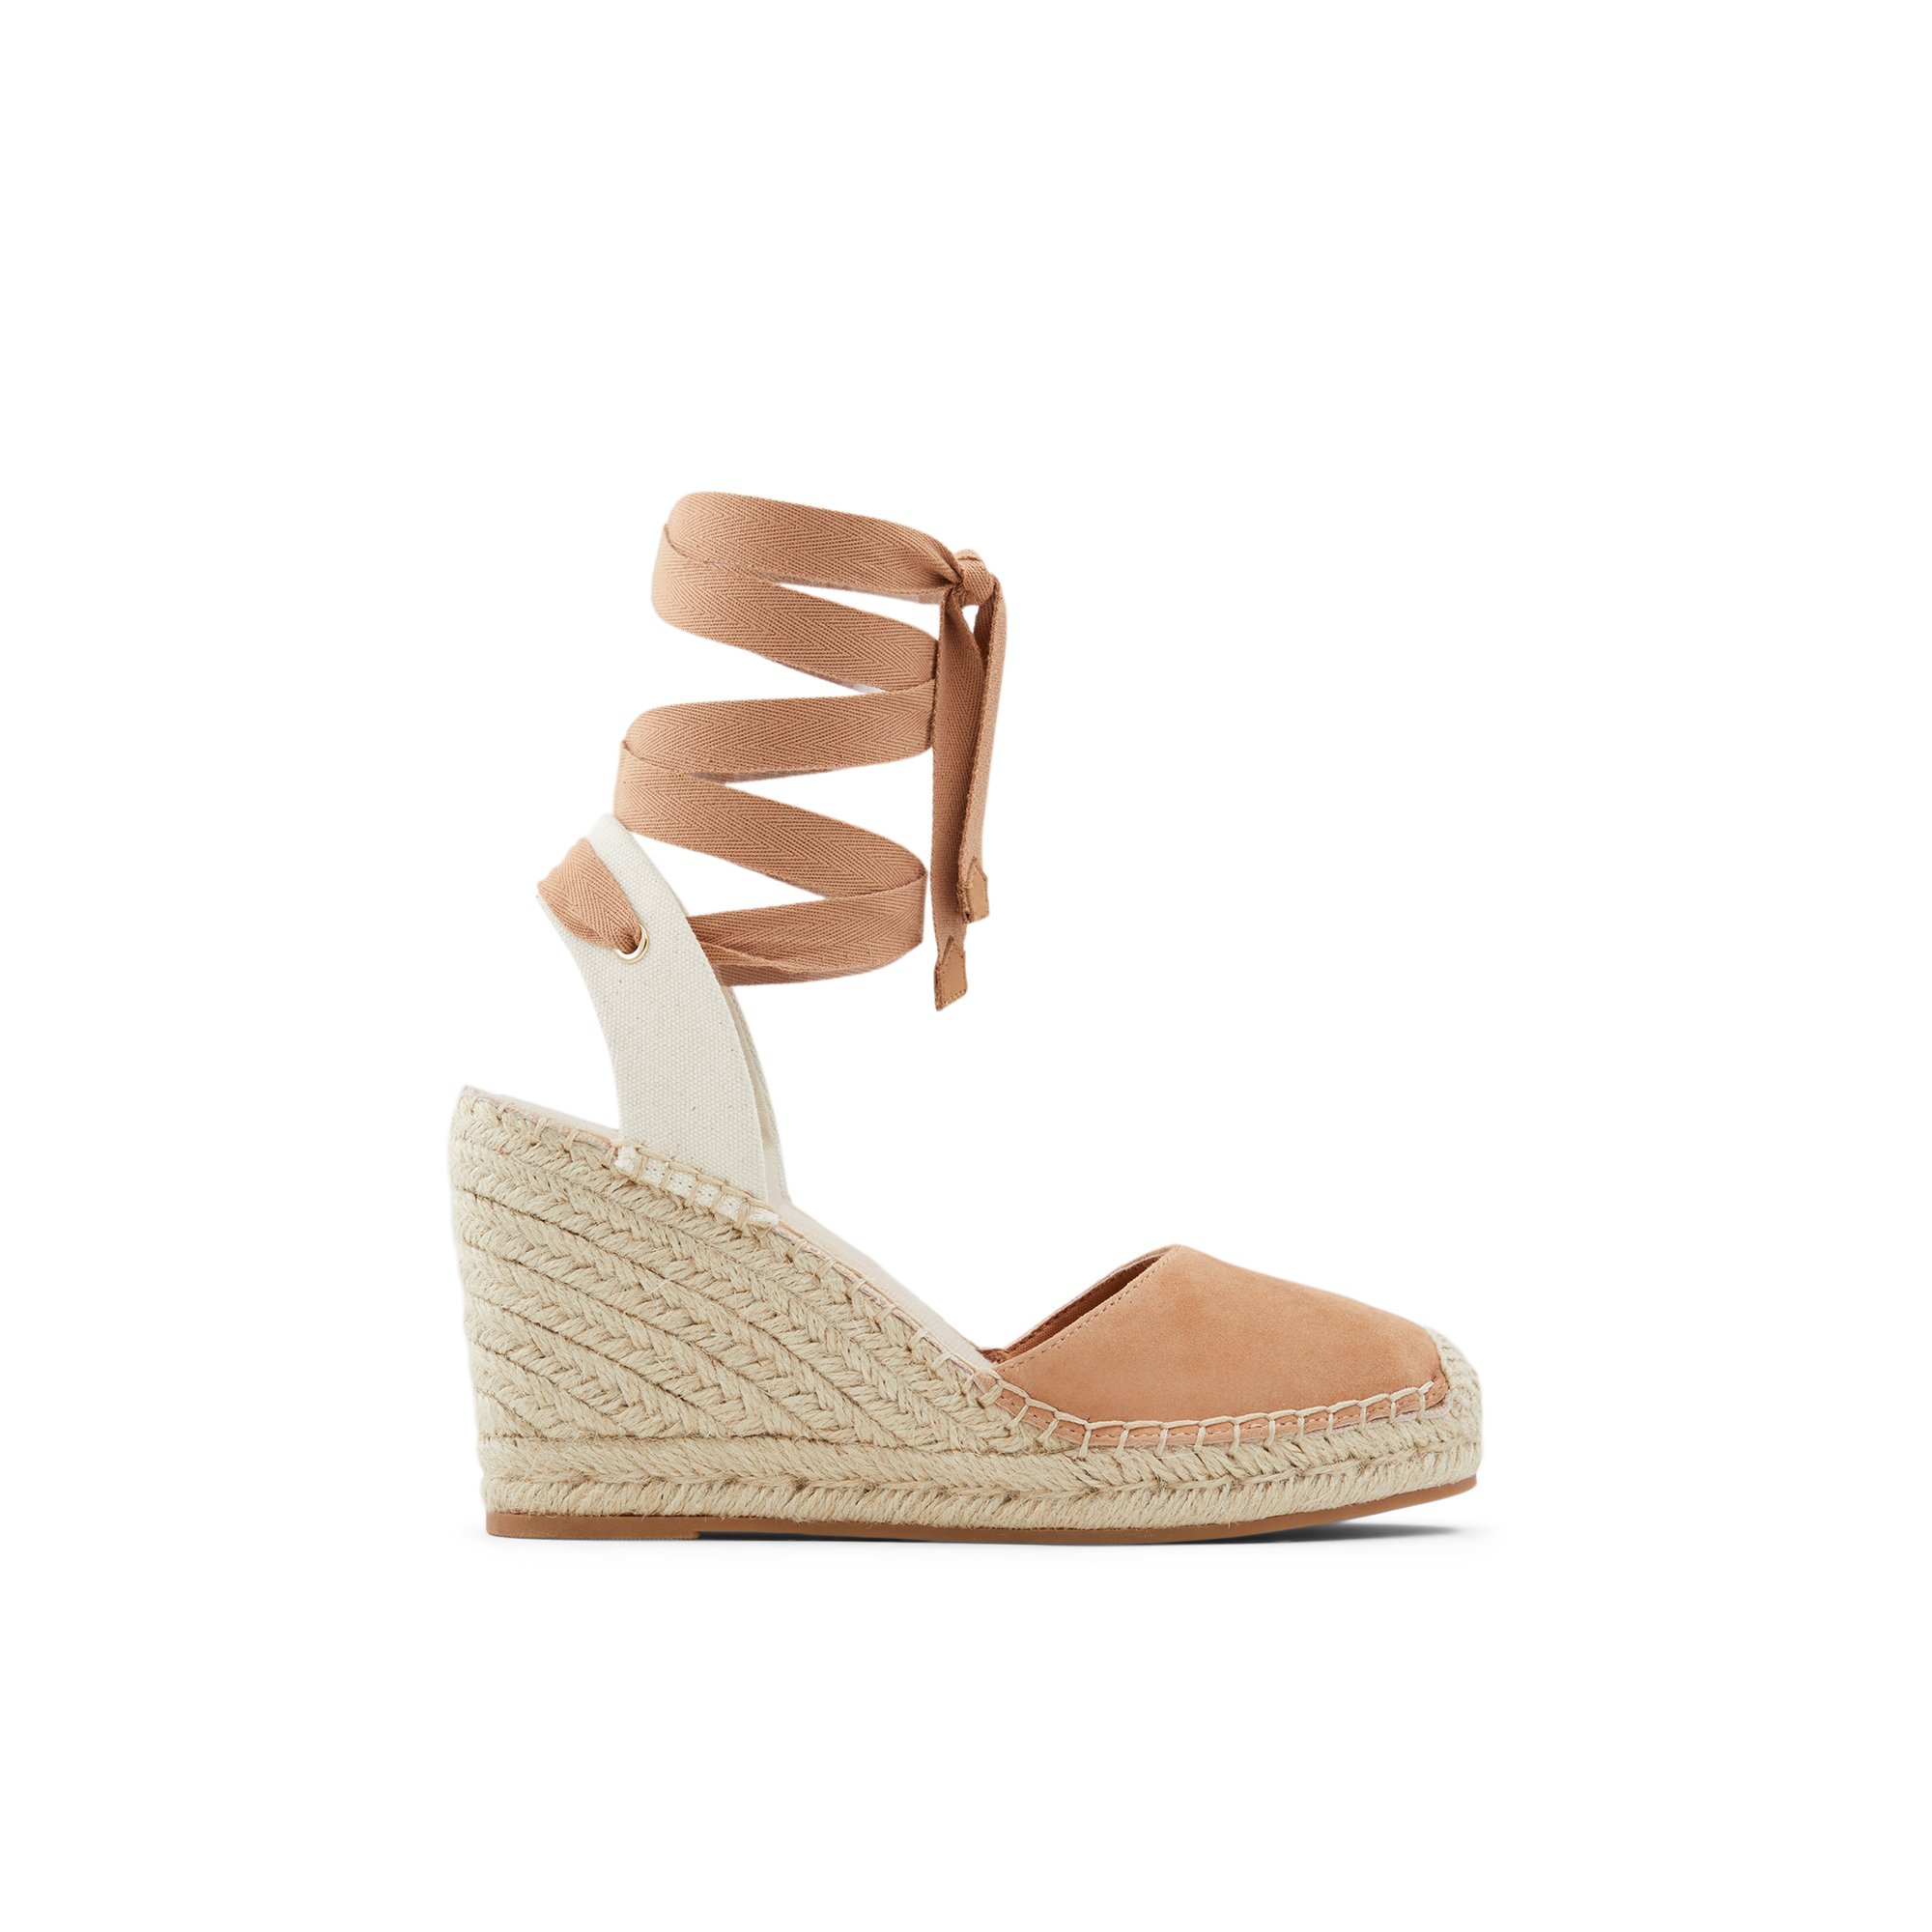 ALDO Efemina - Women's Sandals Wedges - Brown